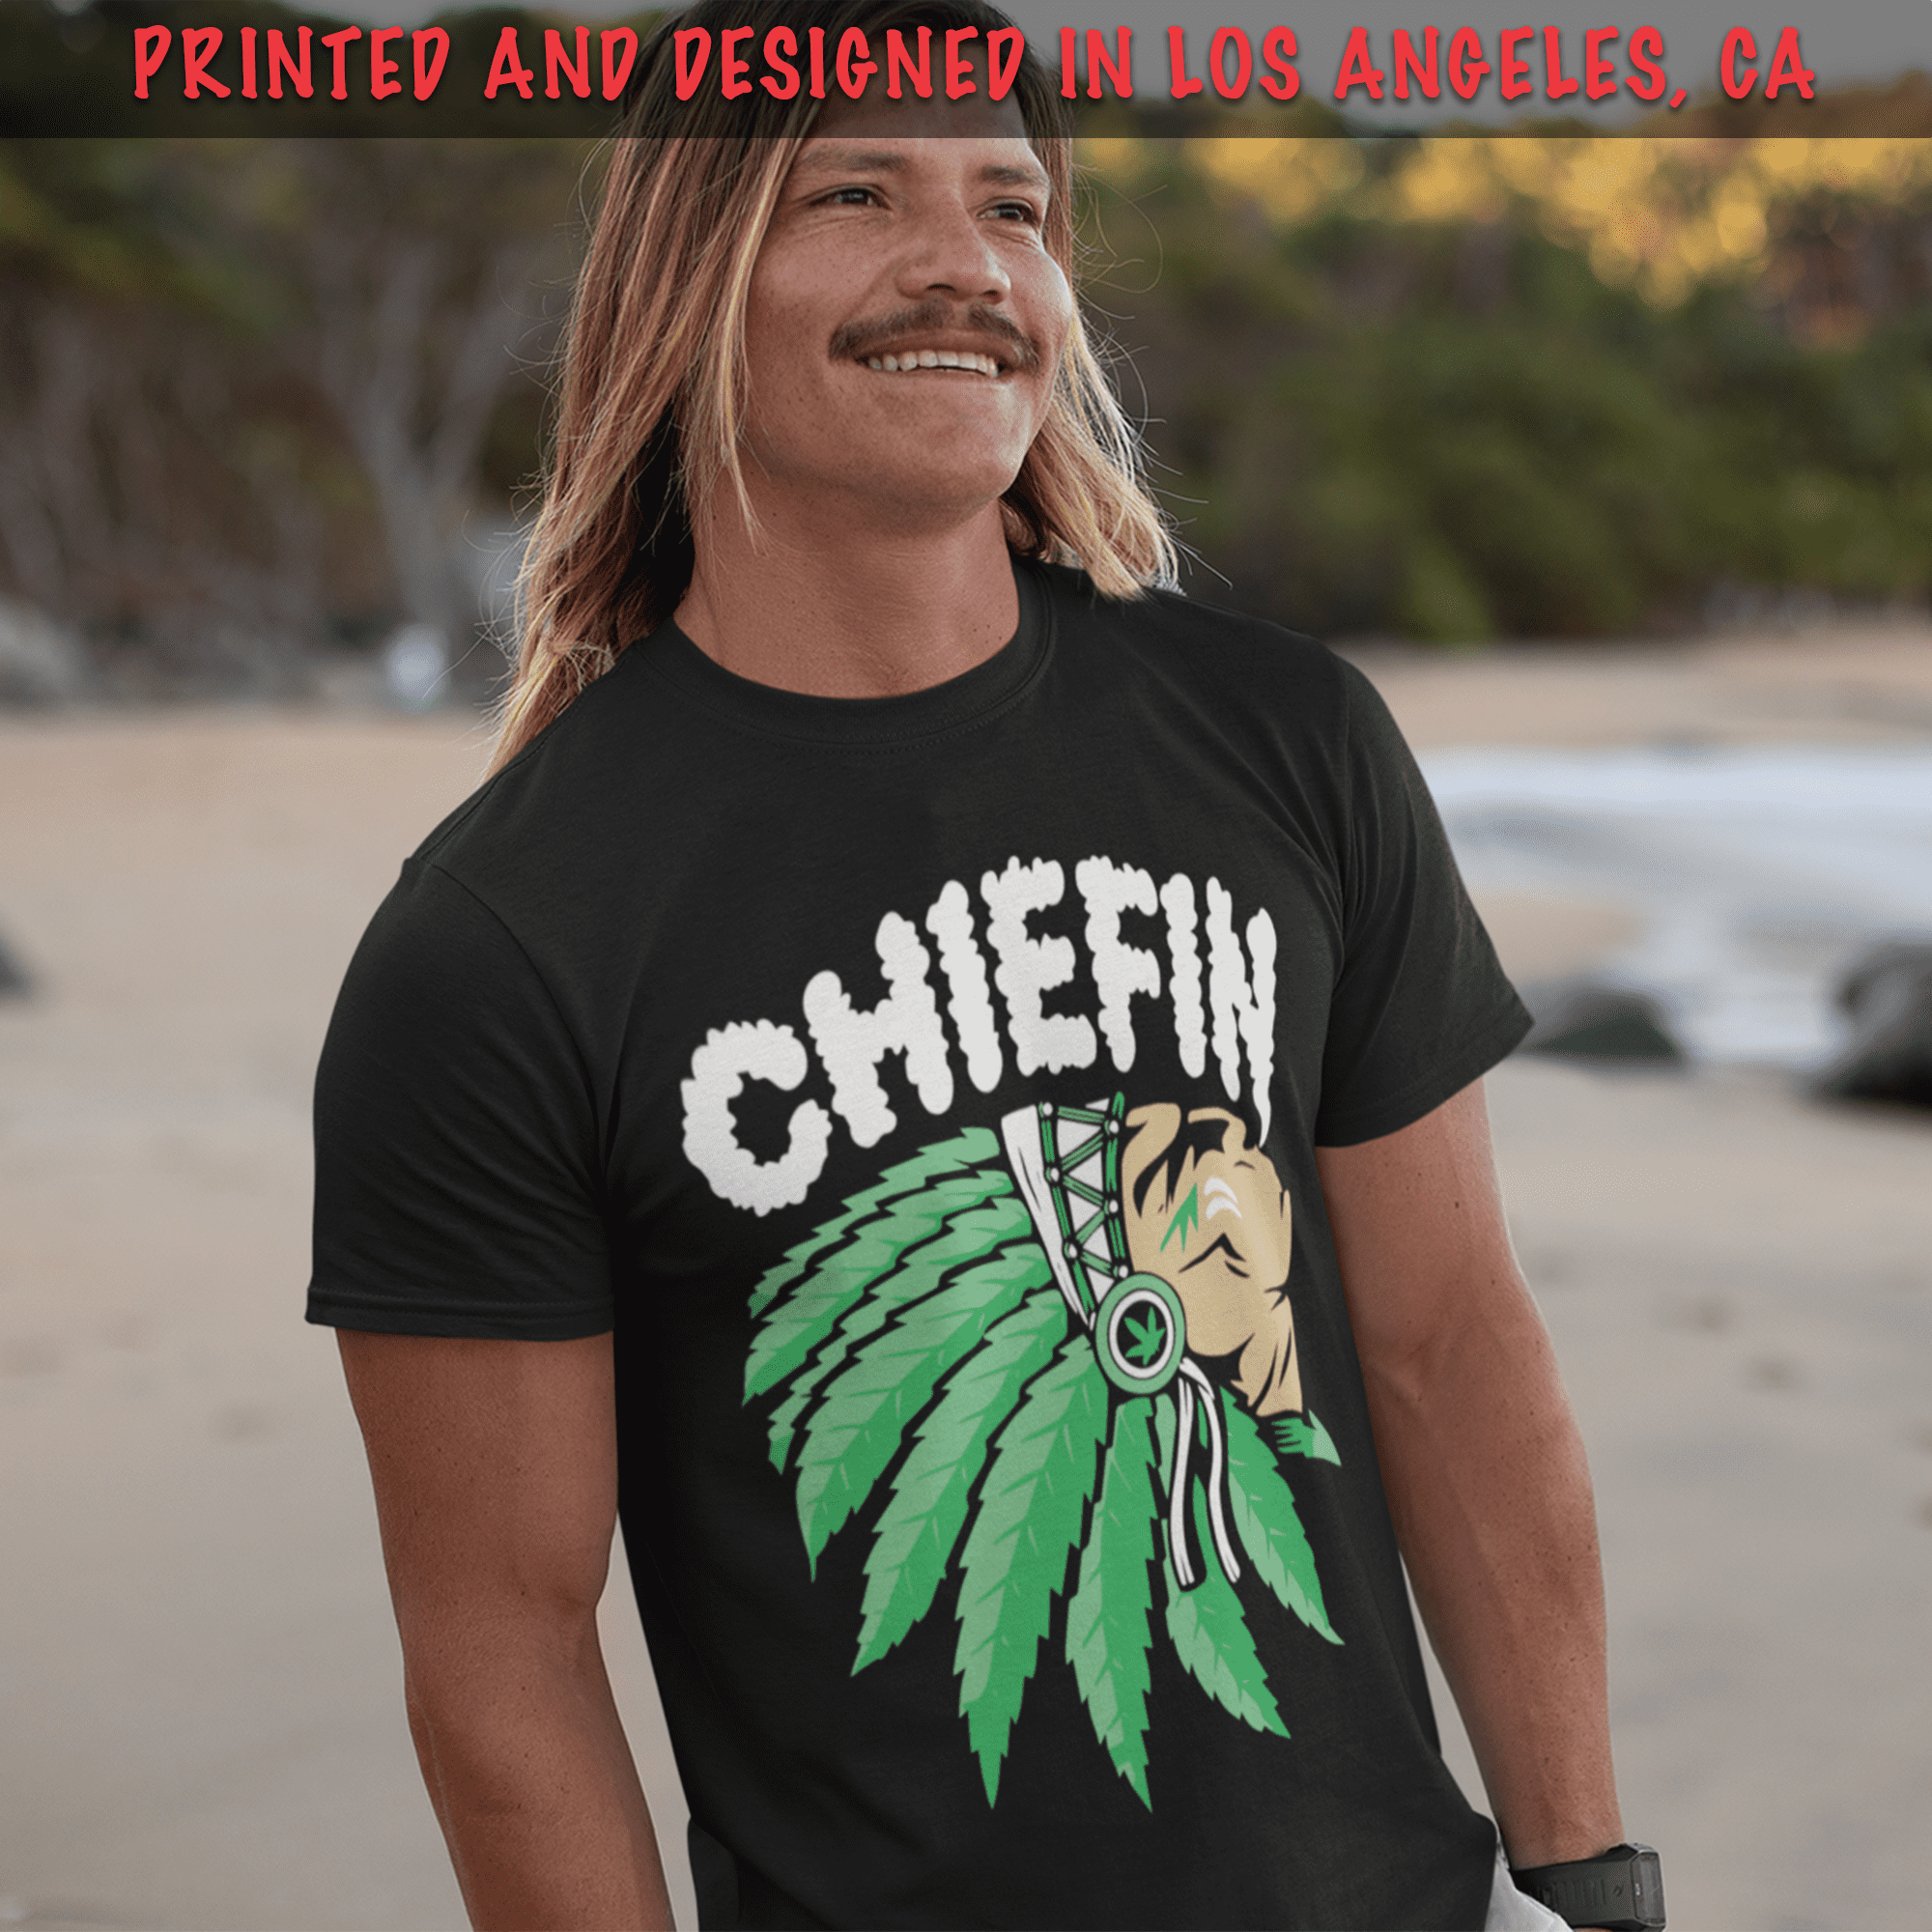 Shirtbanc Chiefin Smoking Native American Shirt Weed Feathered Helmet Design Tee, Men's, Size: Medium, Black